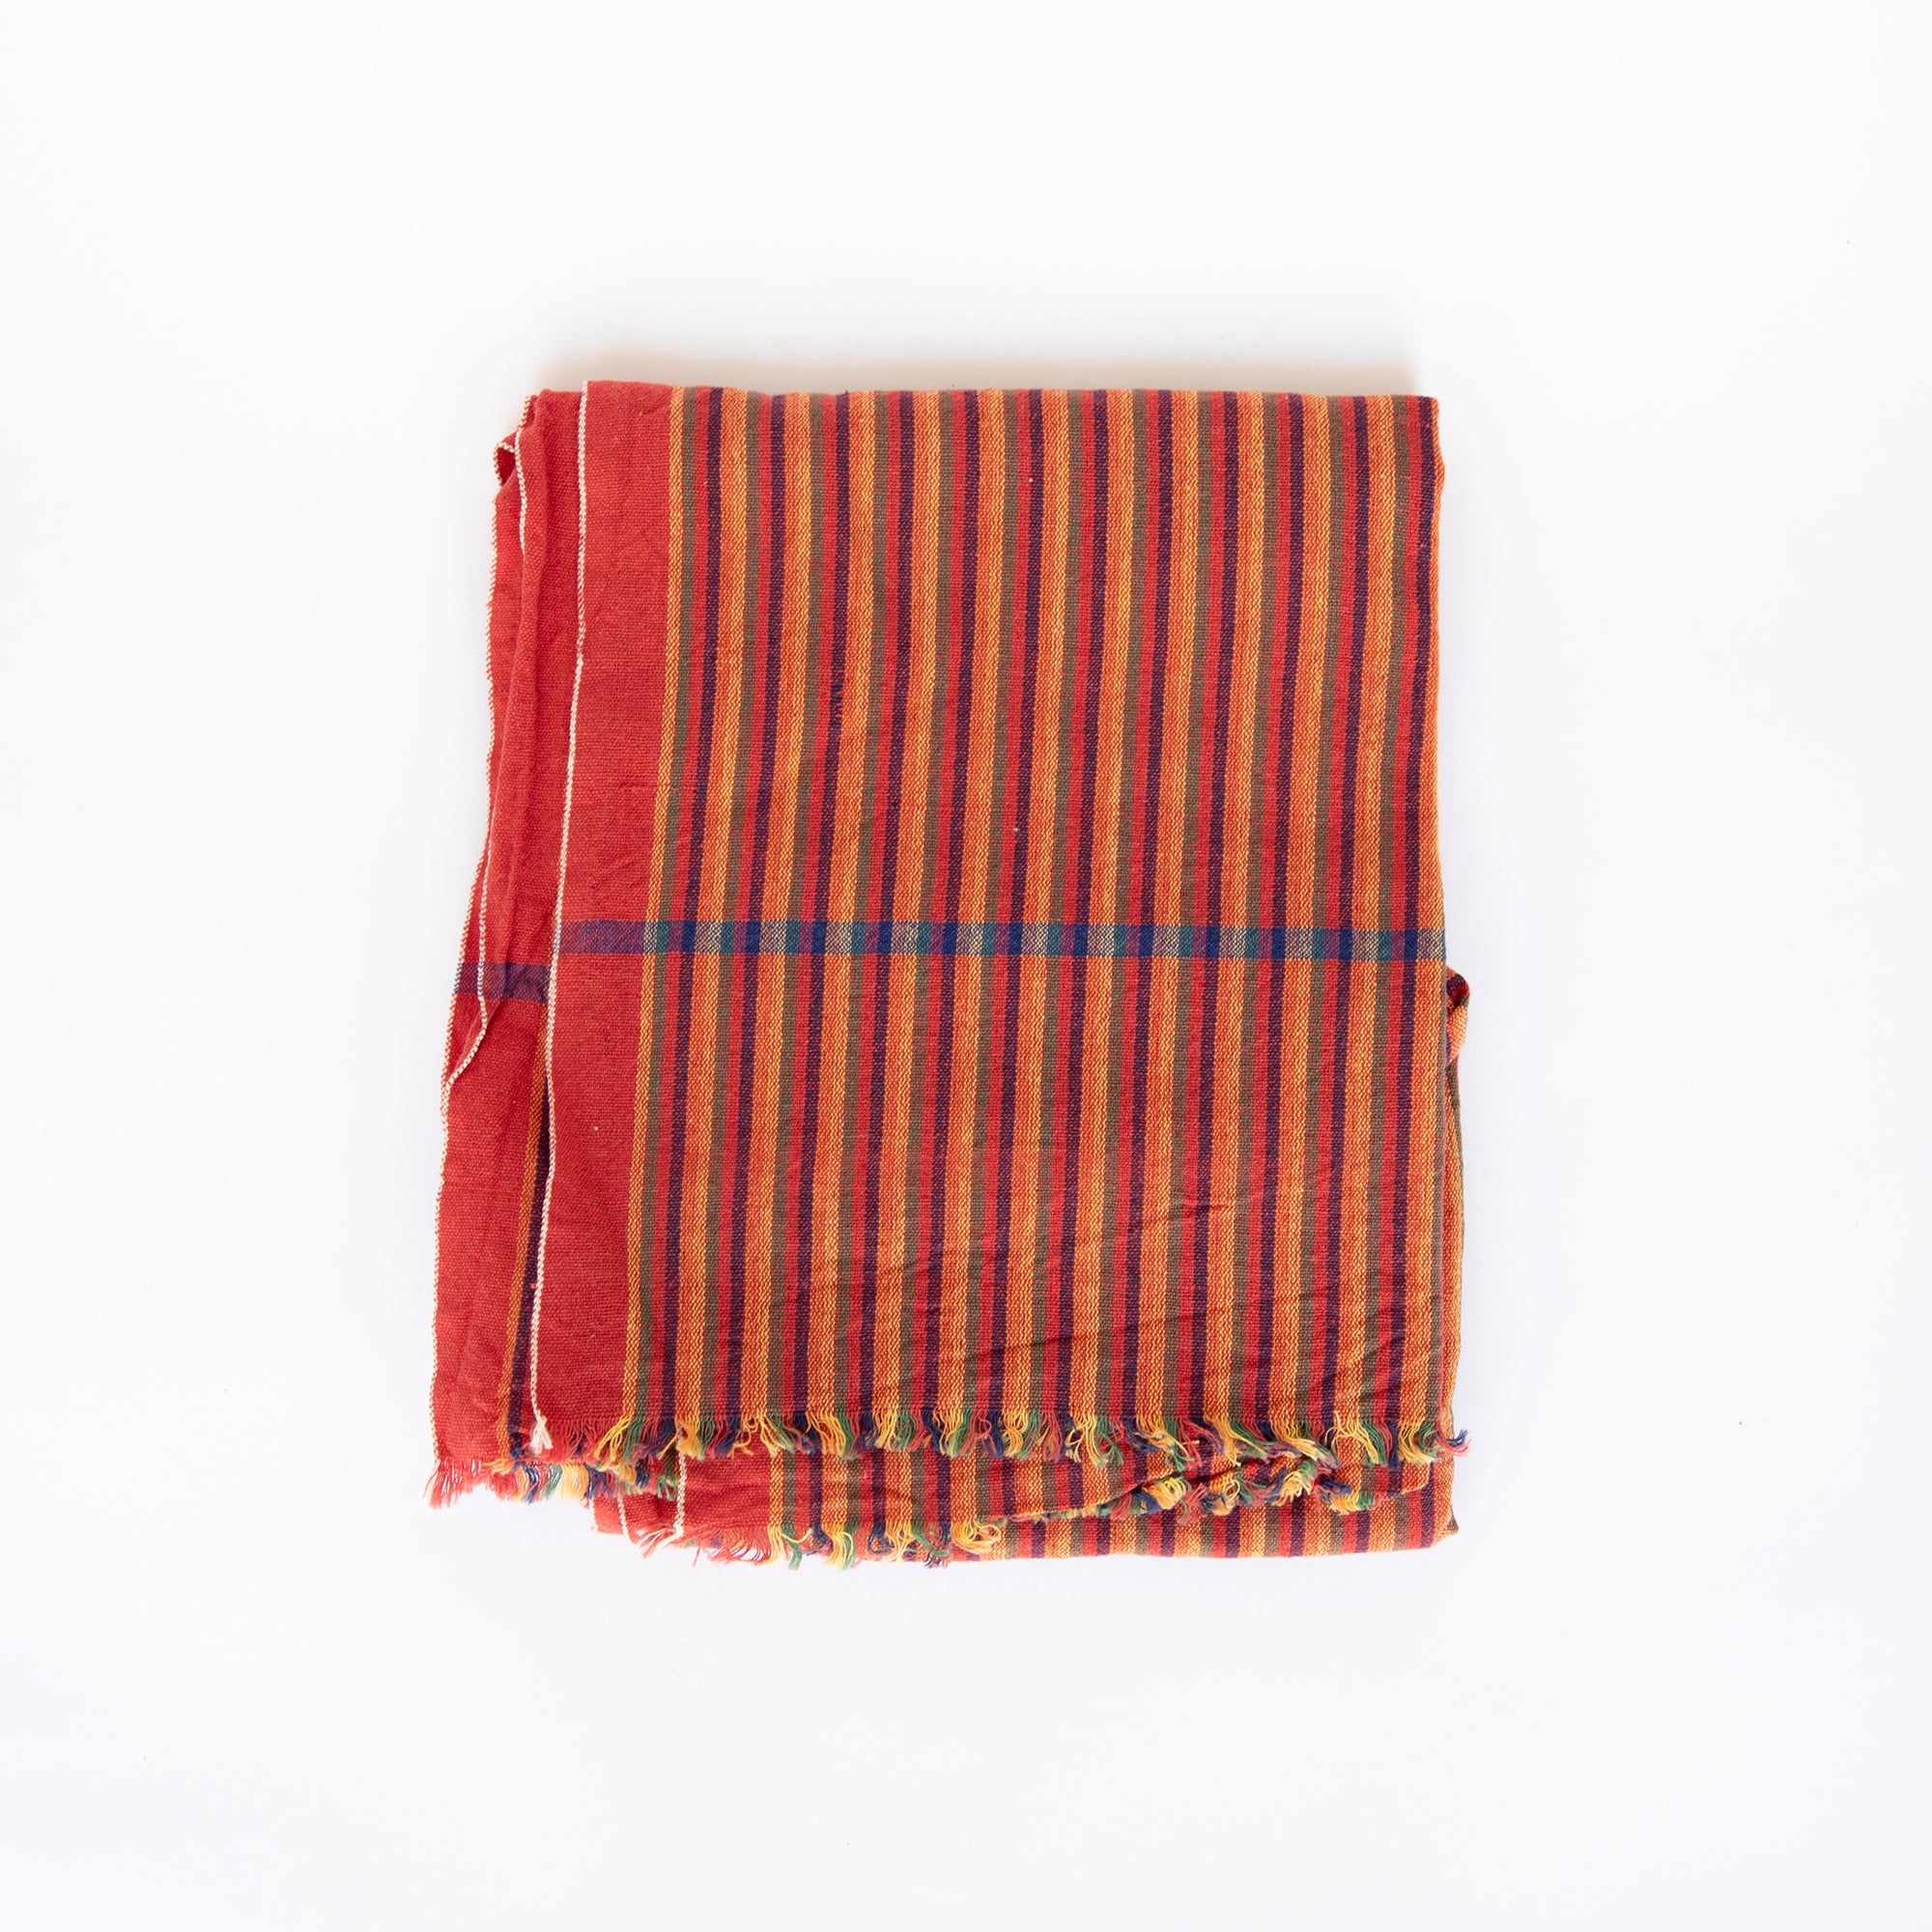 Soft Stripe Towel - Red